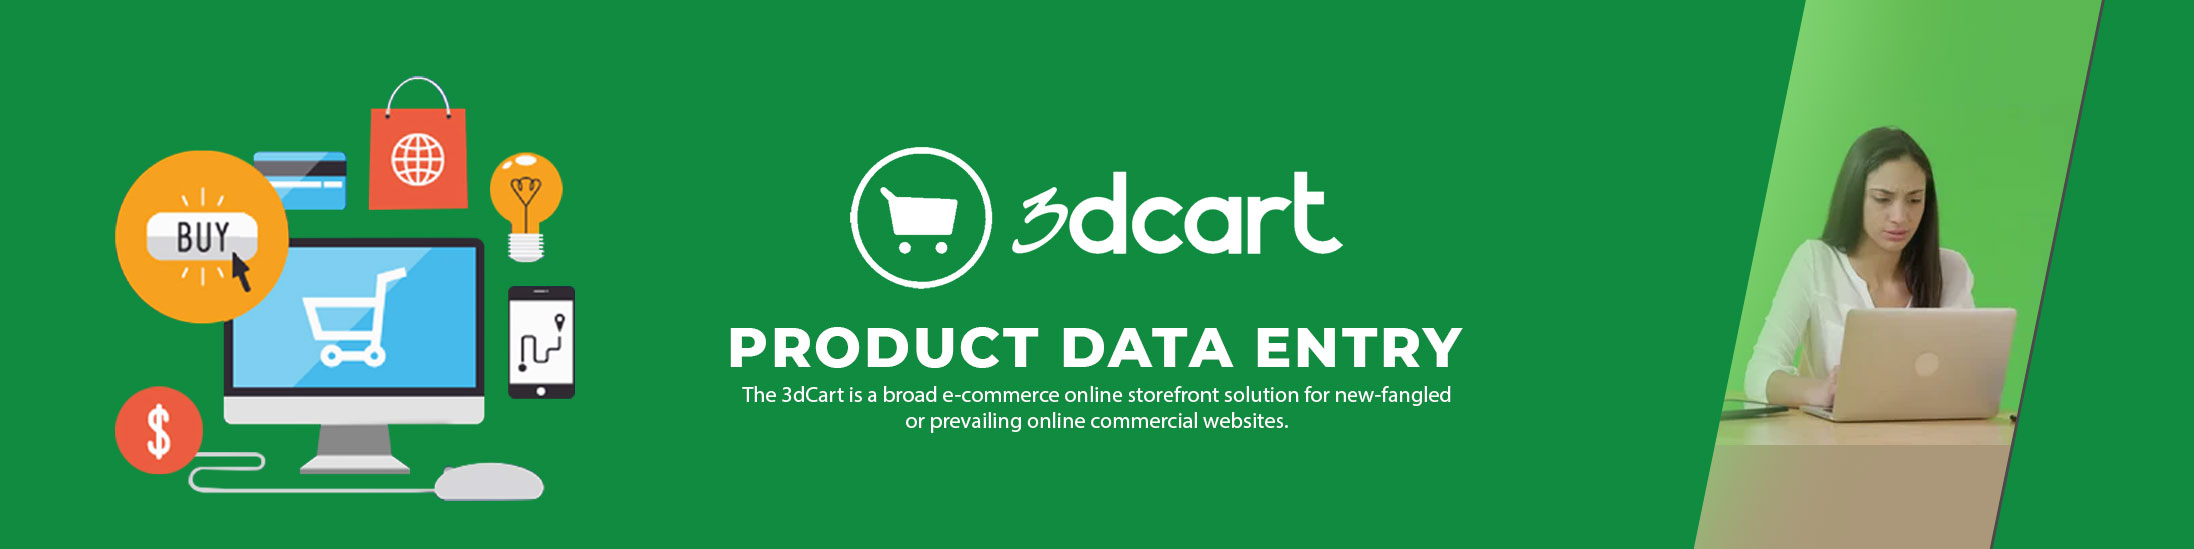 3dCart Product Upload Service